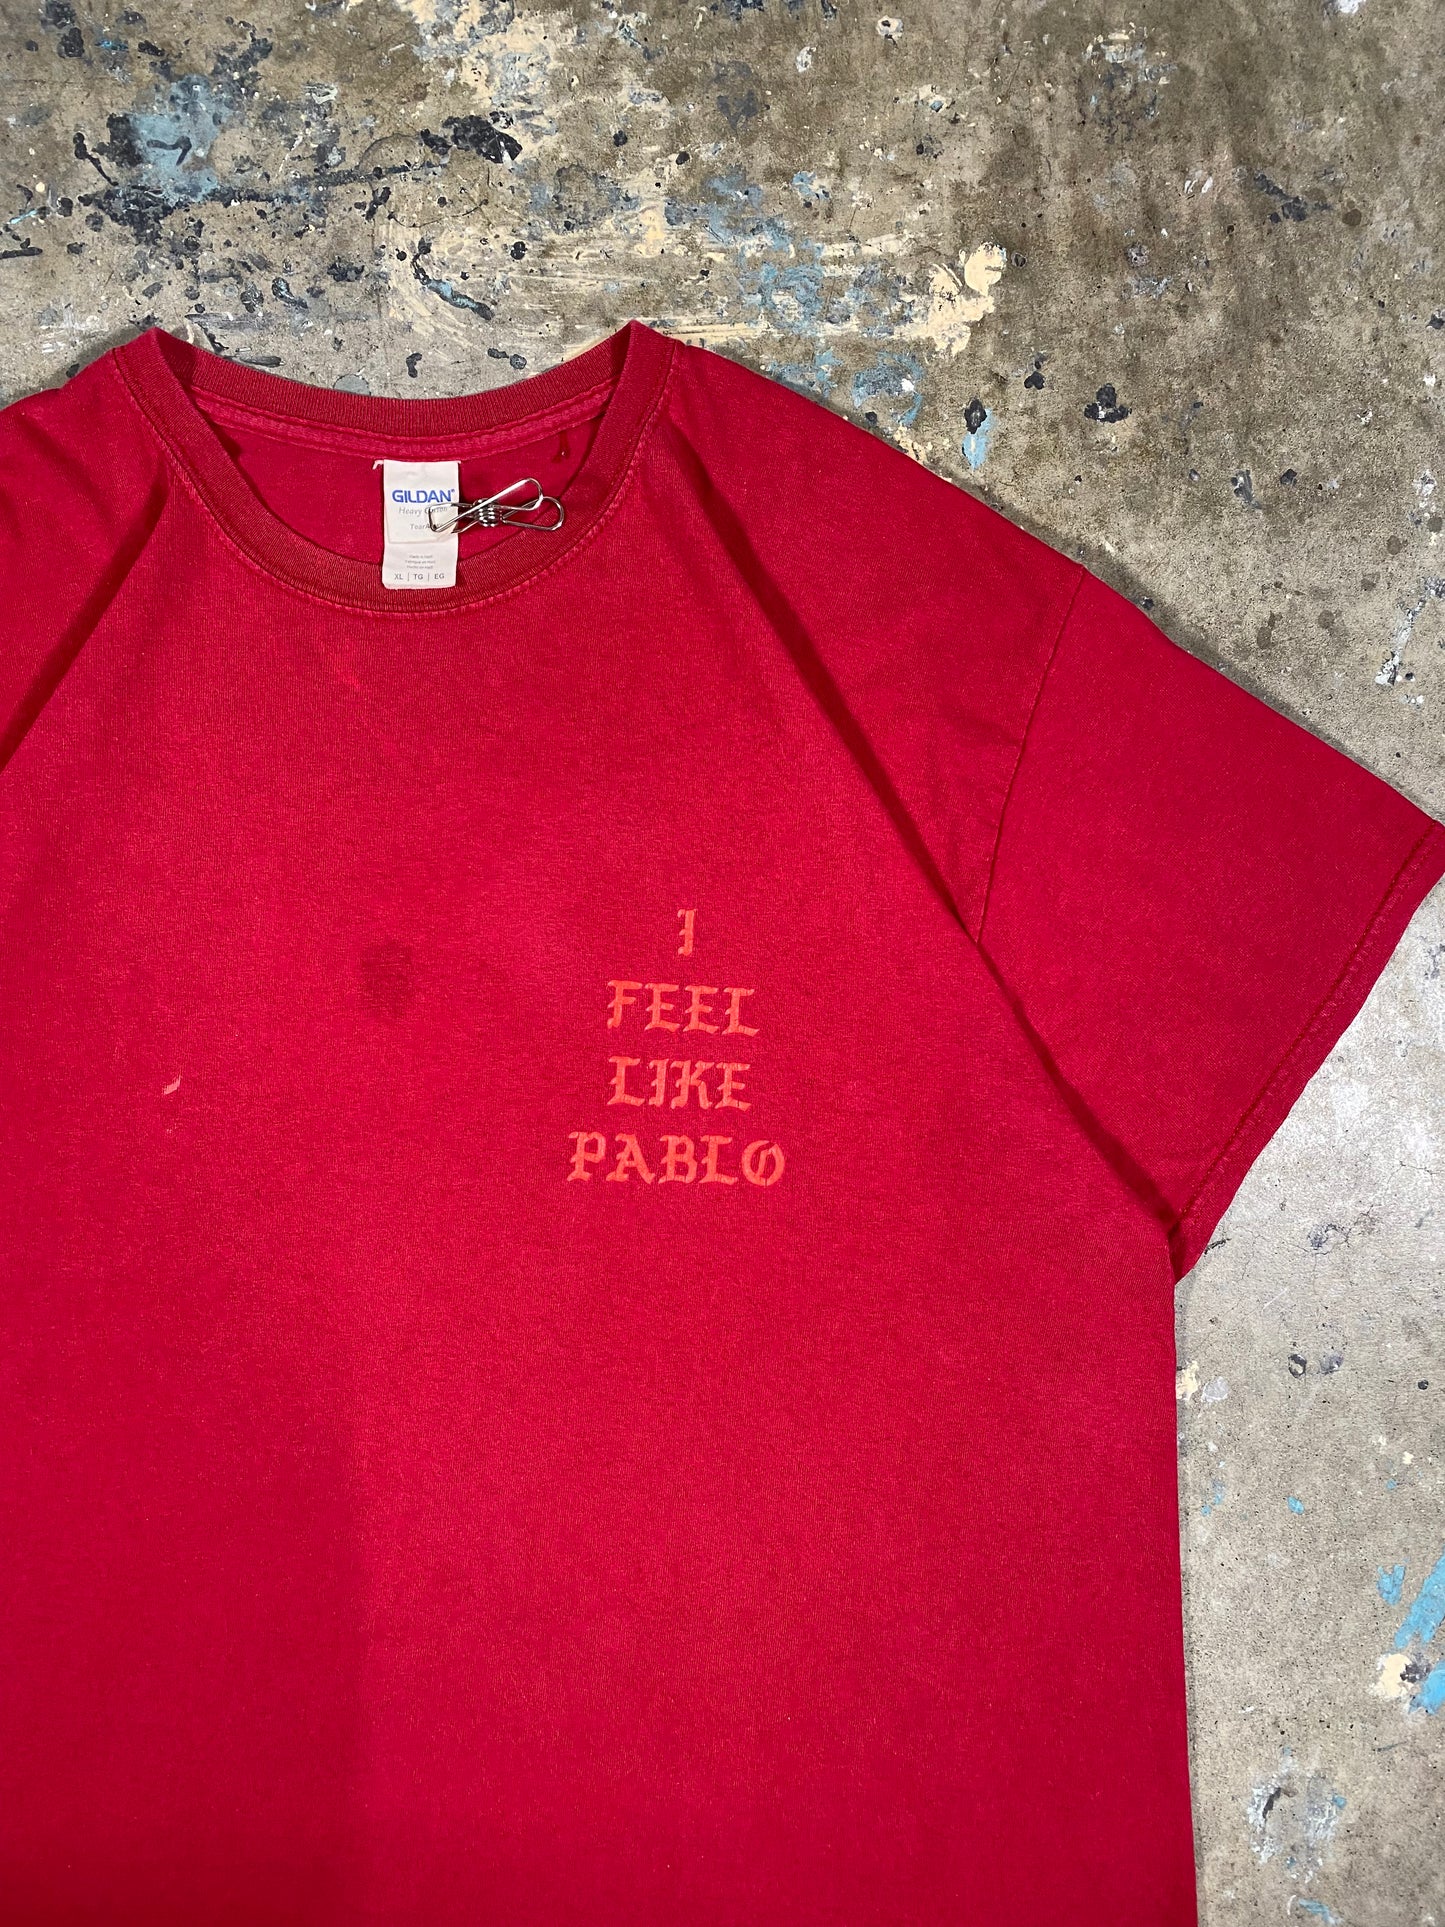 Kanye West "I Feel Like Pablo" Tee (XL)